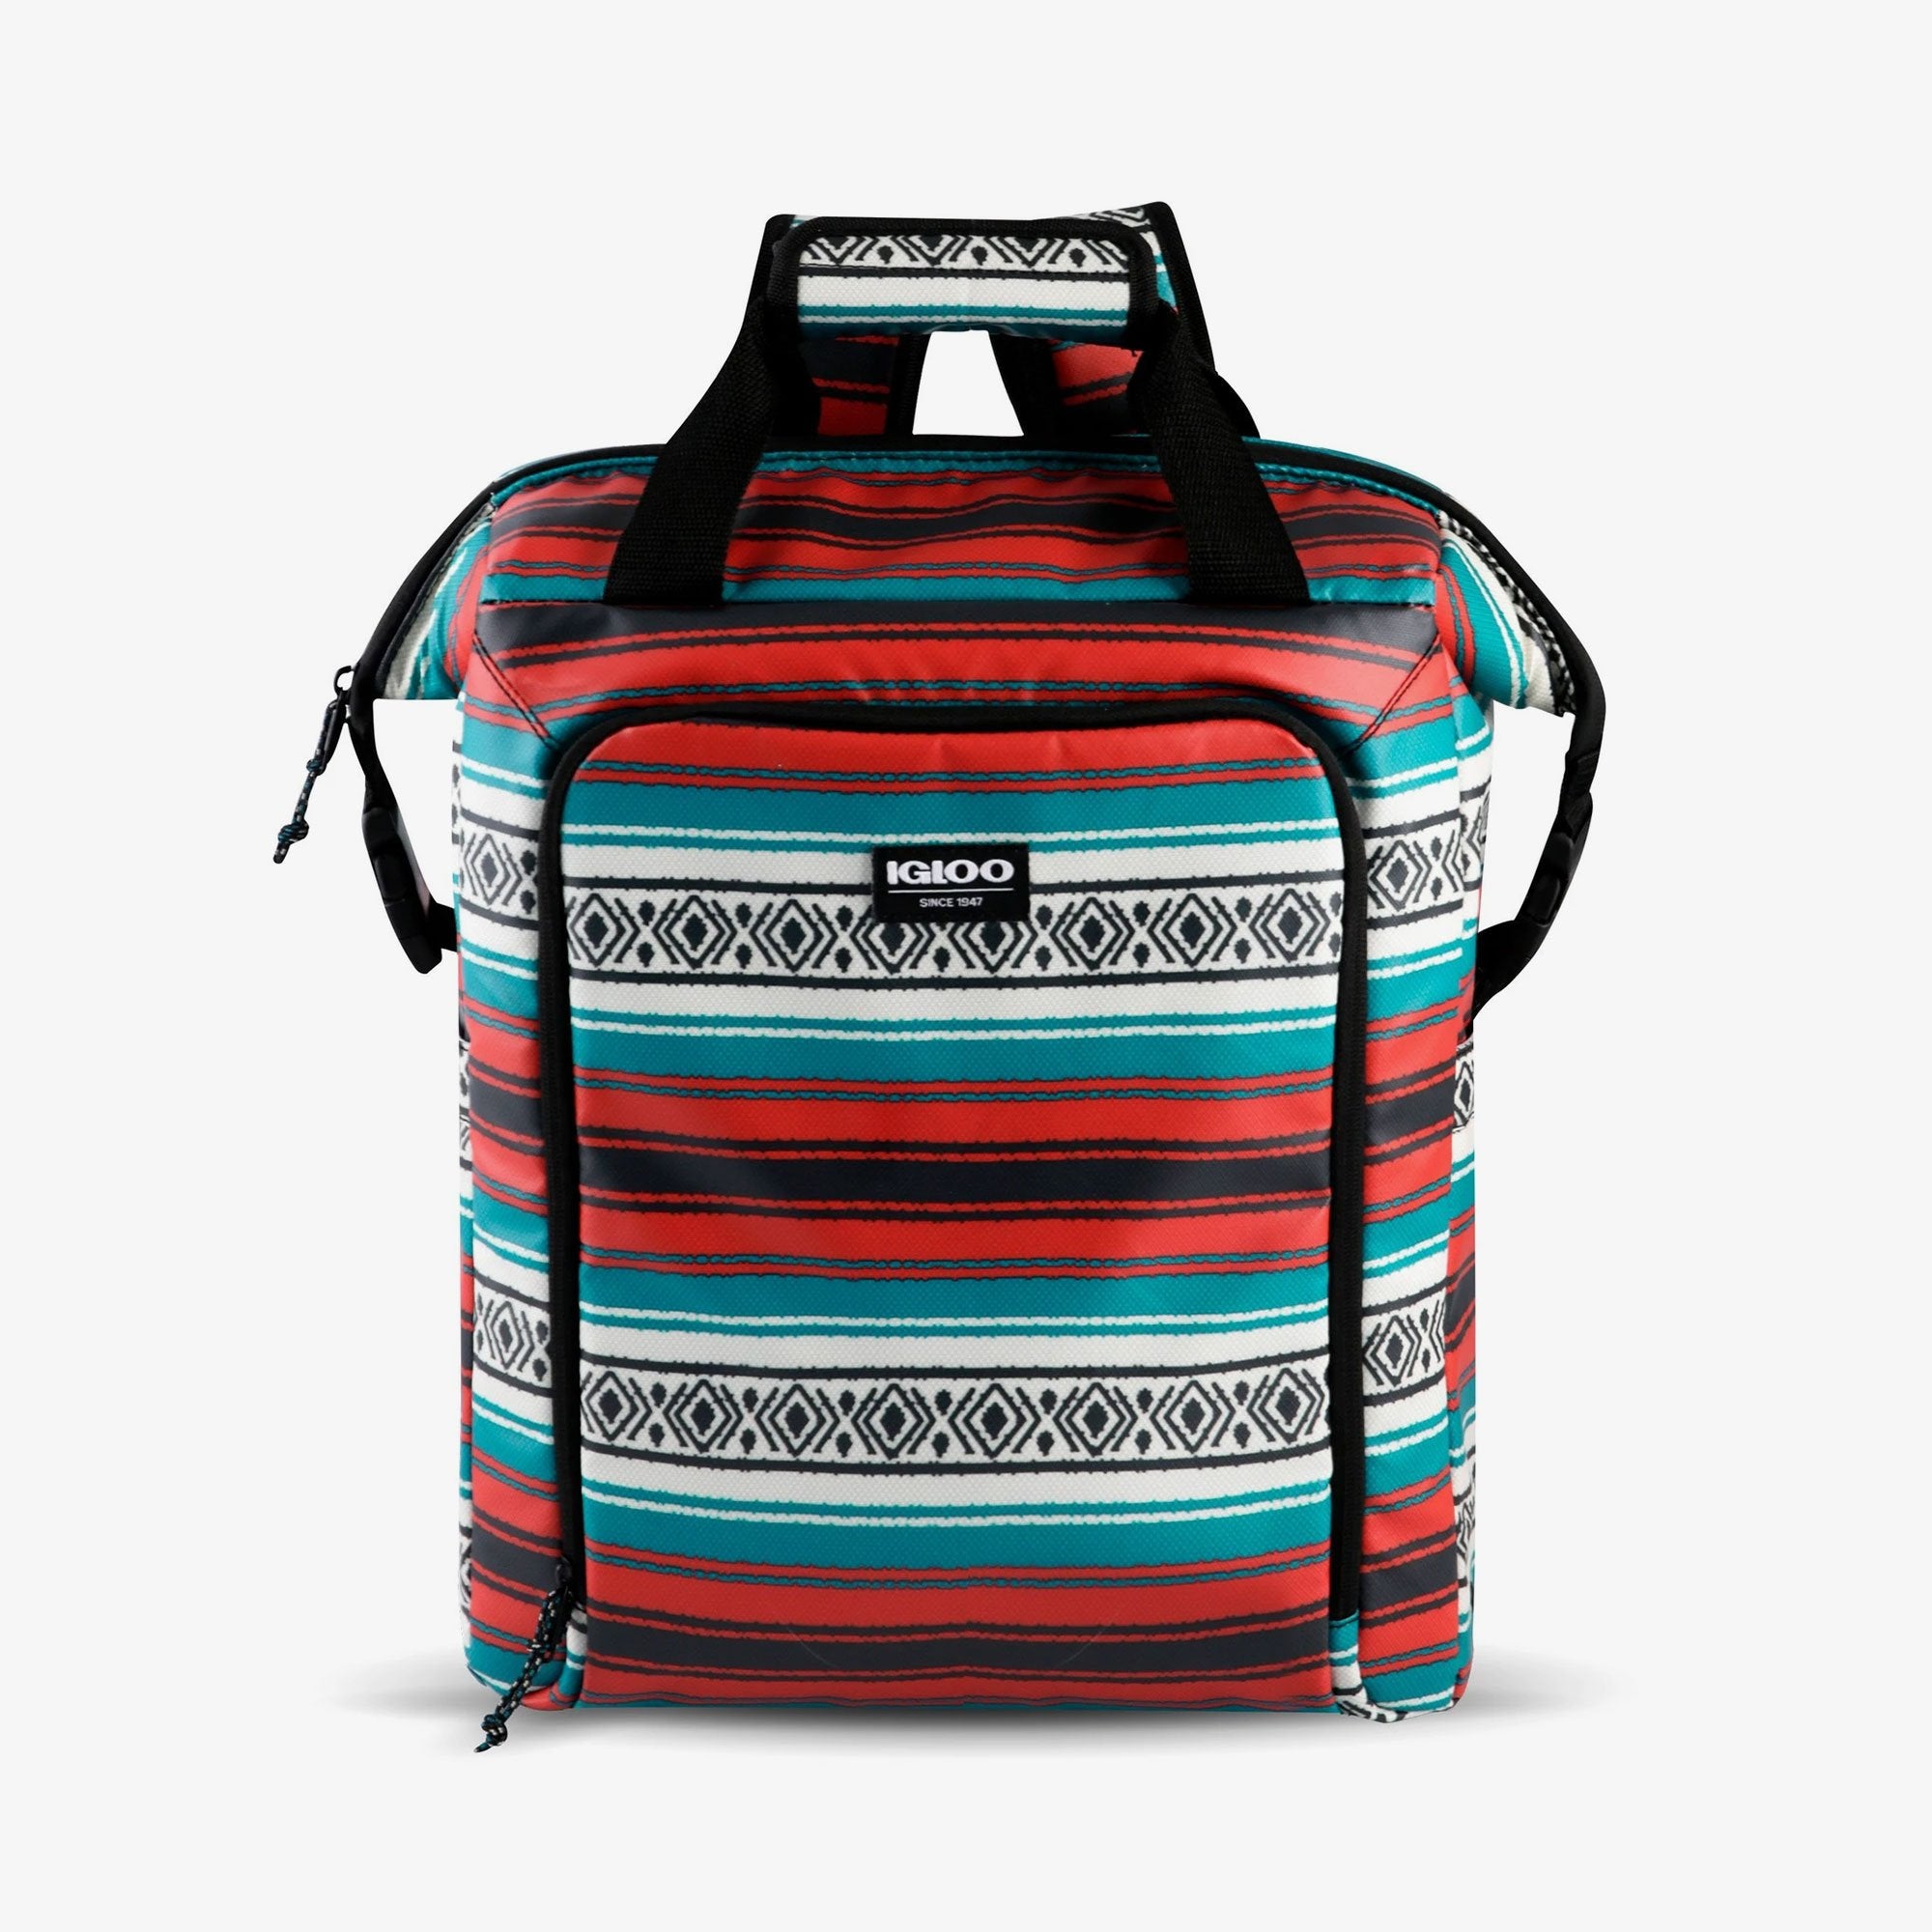 Igloo Seadrift Switch Backpack Cooler Promotional Giveaway Crestline